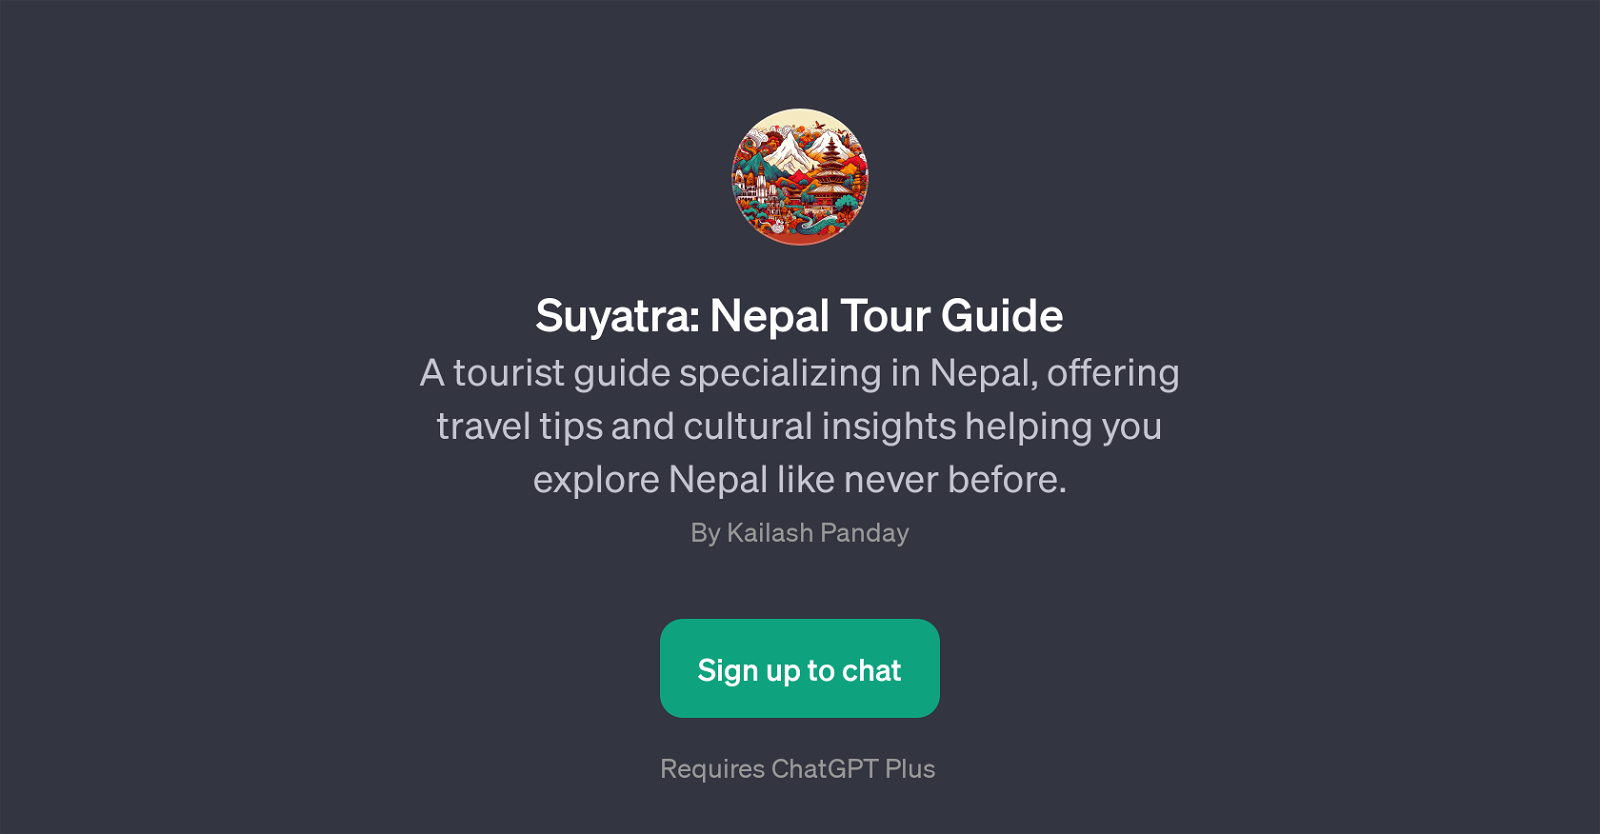 Suyatra: Nepal Tour Guide website